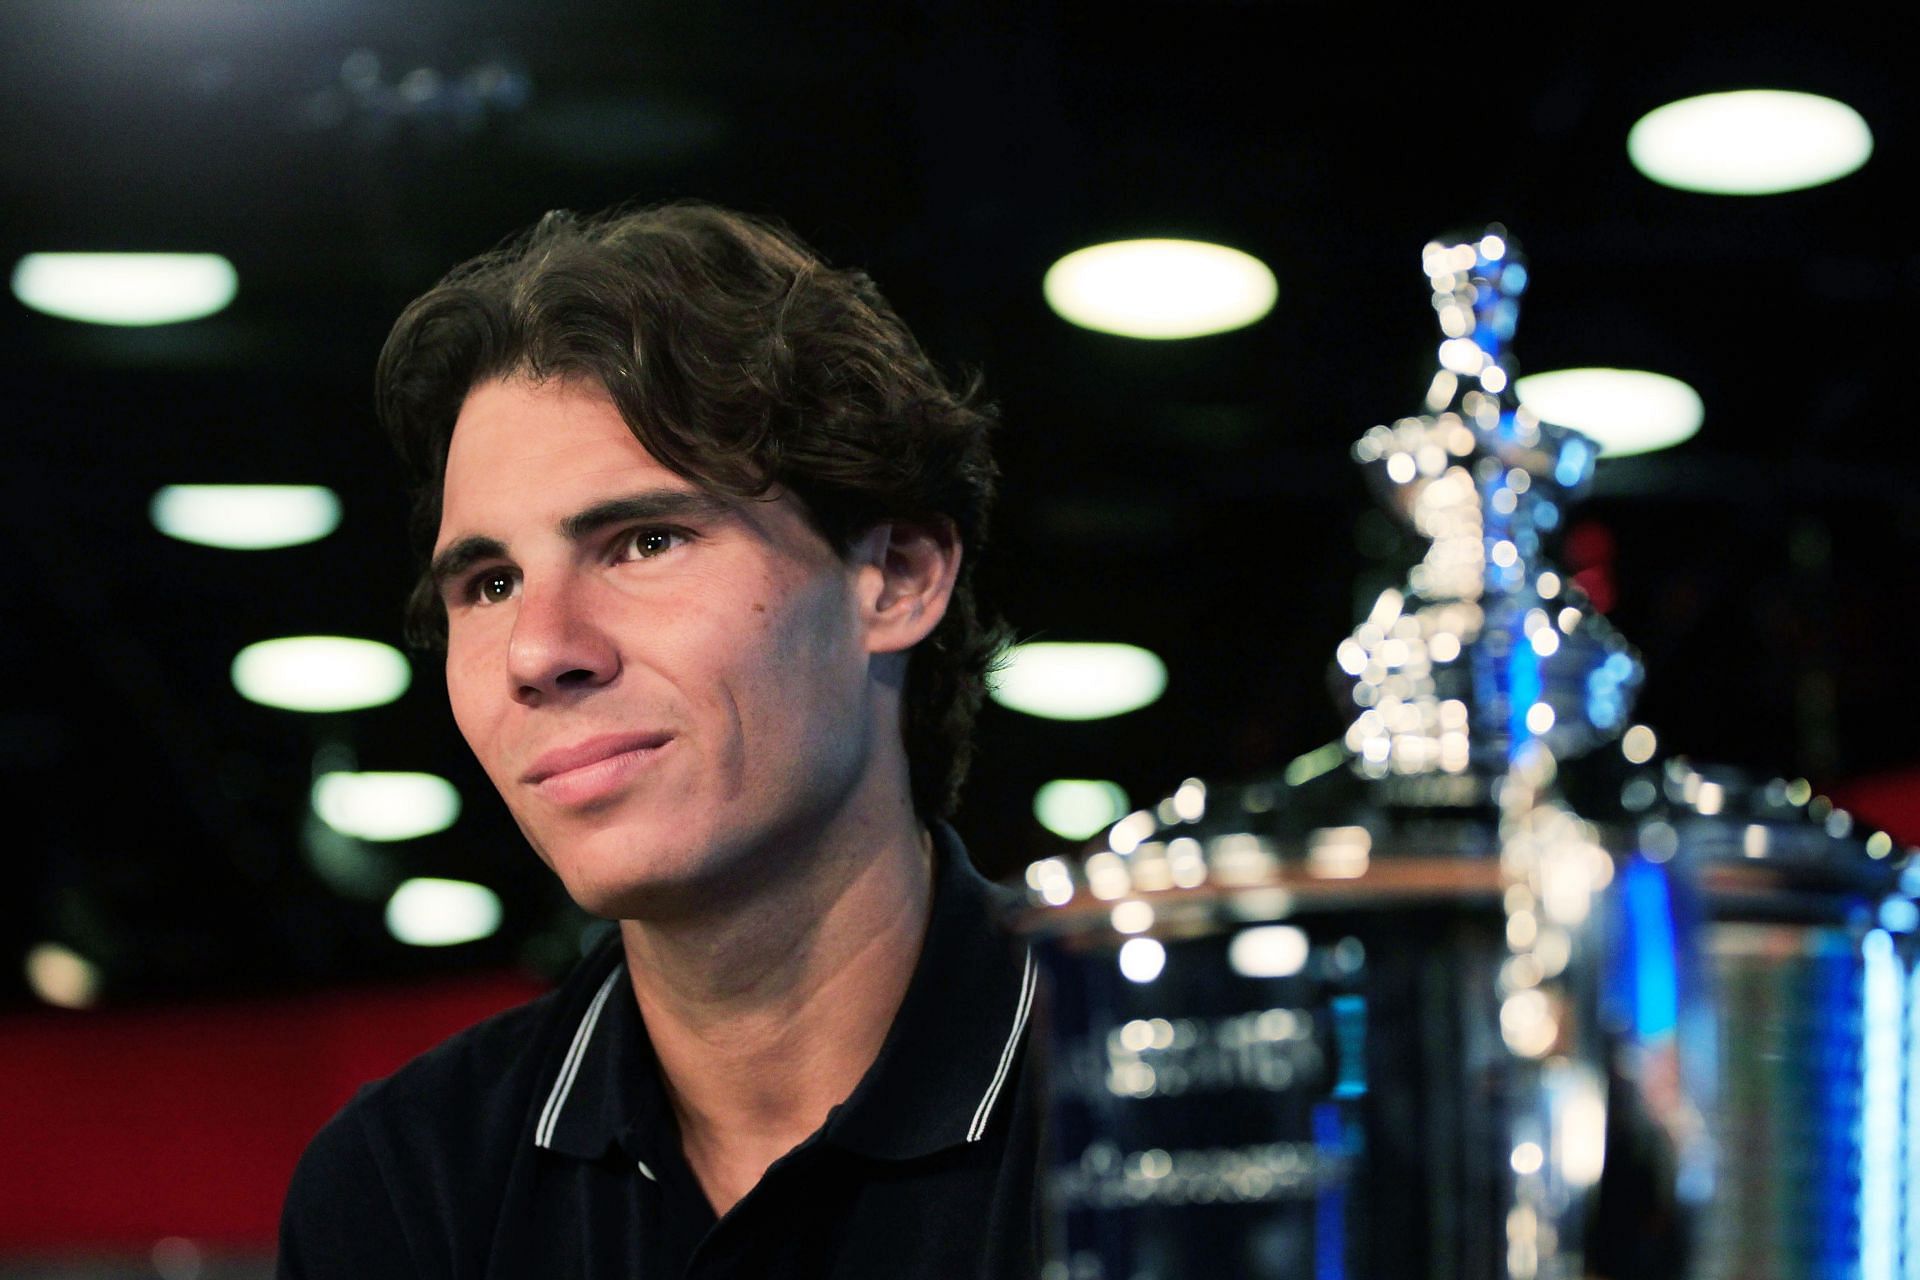 U.S. Open Champion Rafael Nadal back in 2010